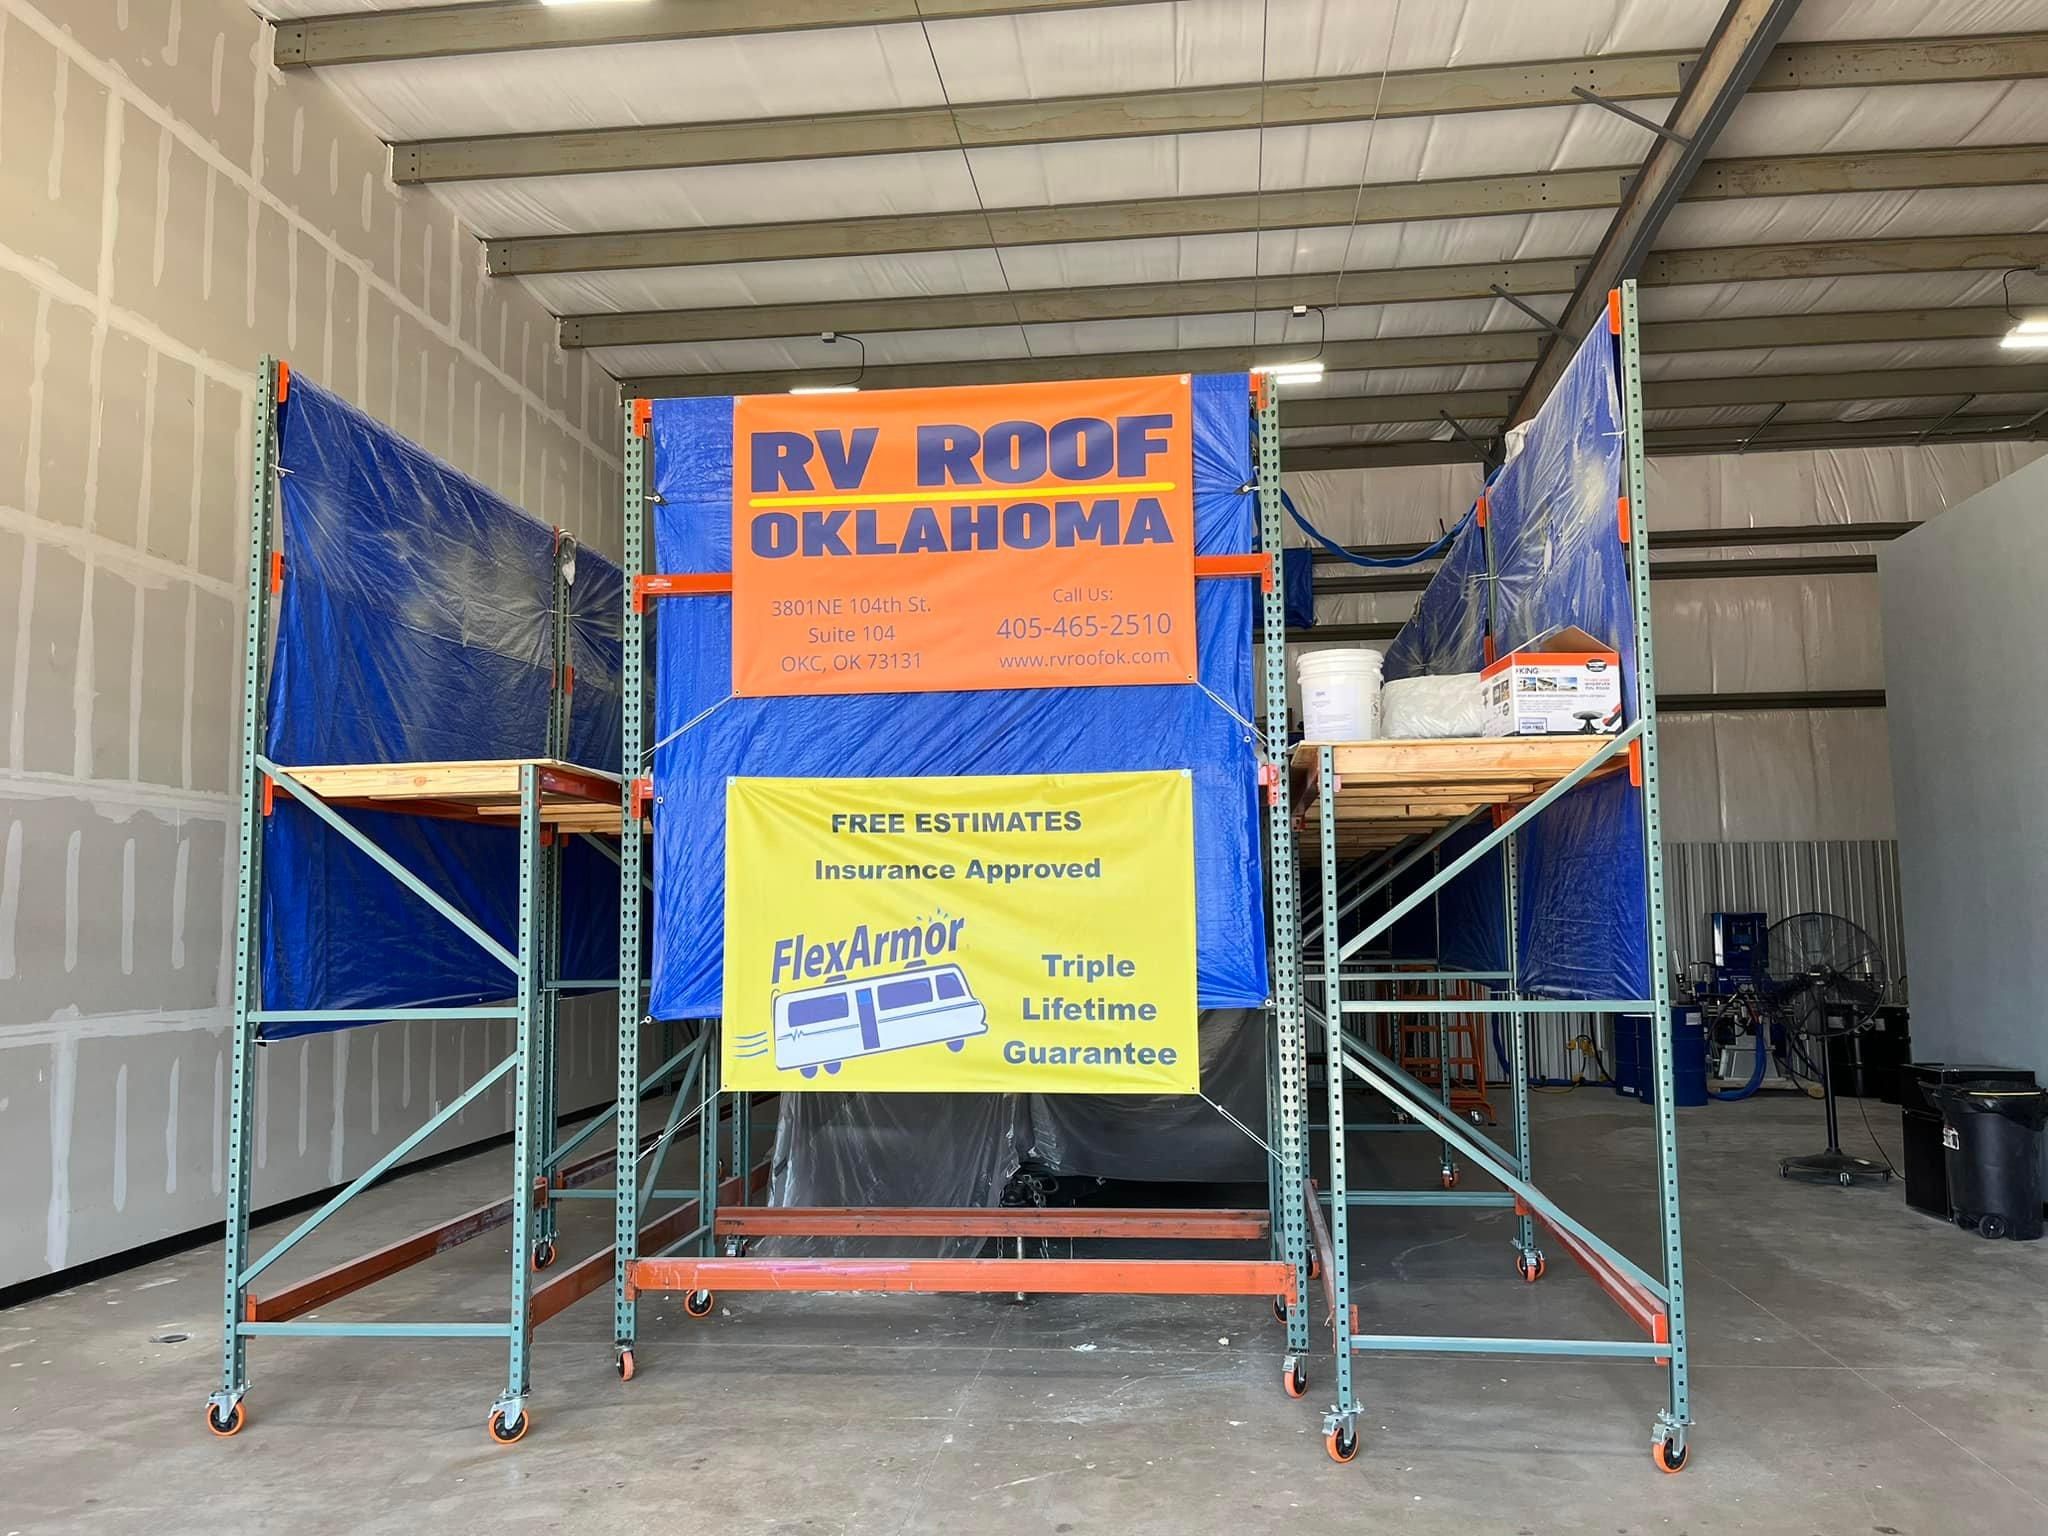 OKC Shop for RV Roof Oklahoma in Oklahoma City, OK